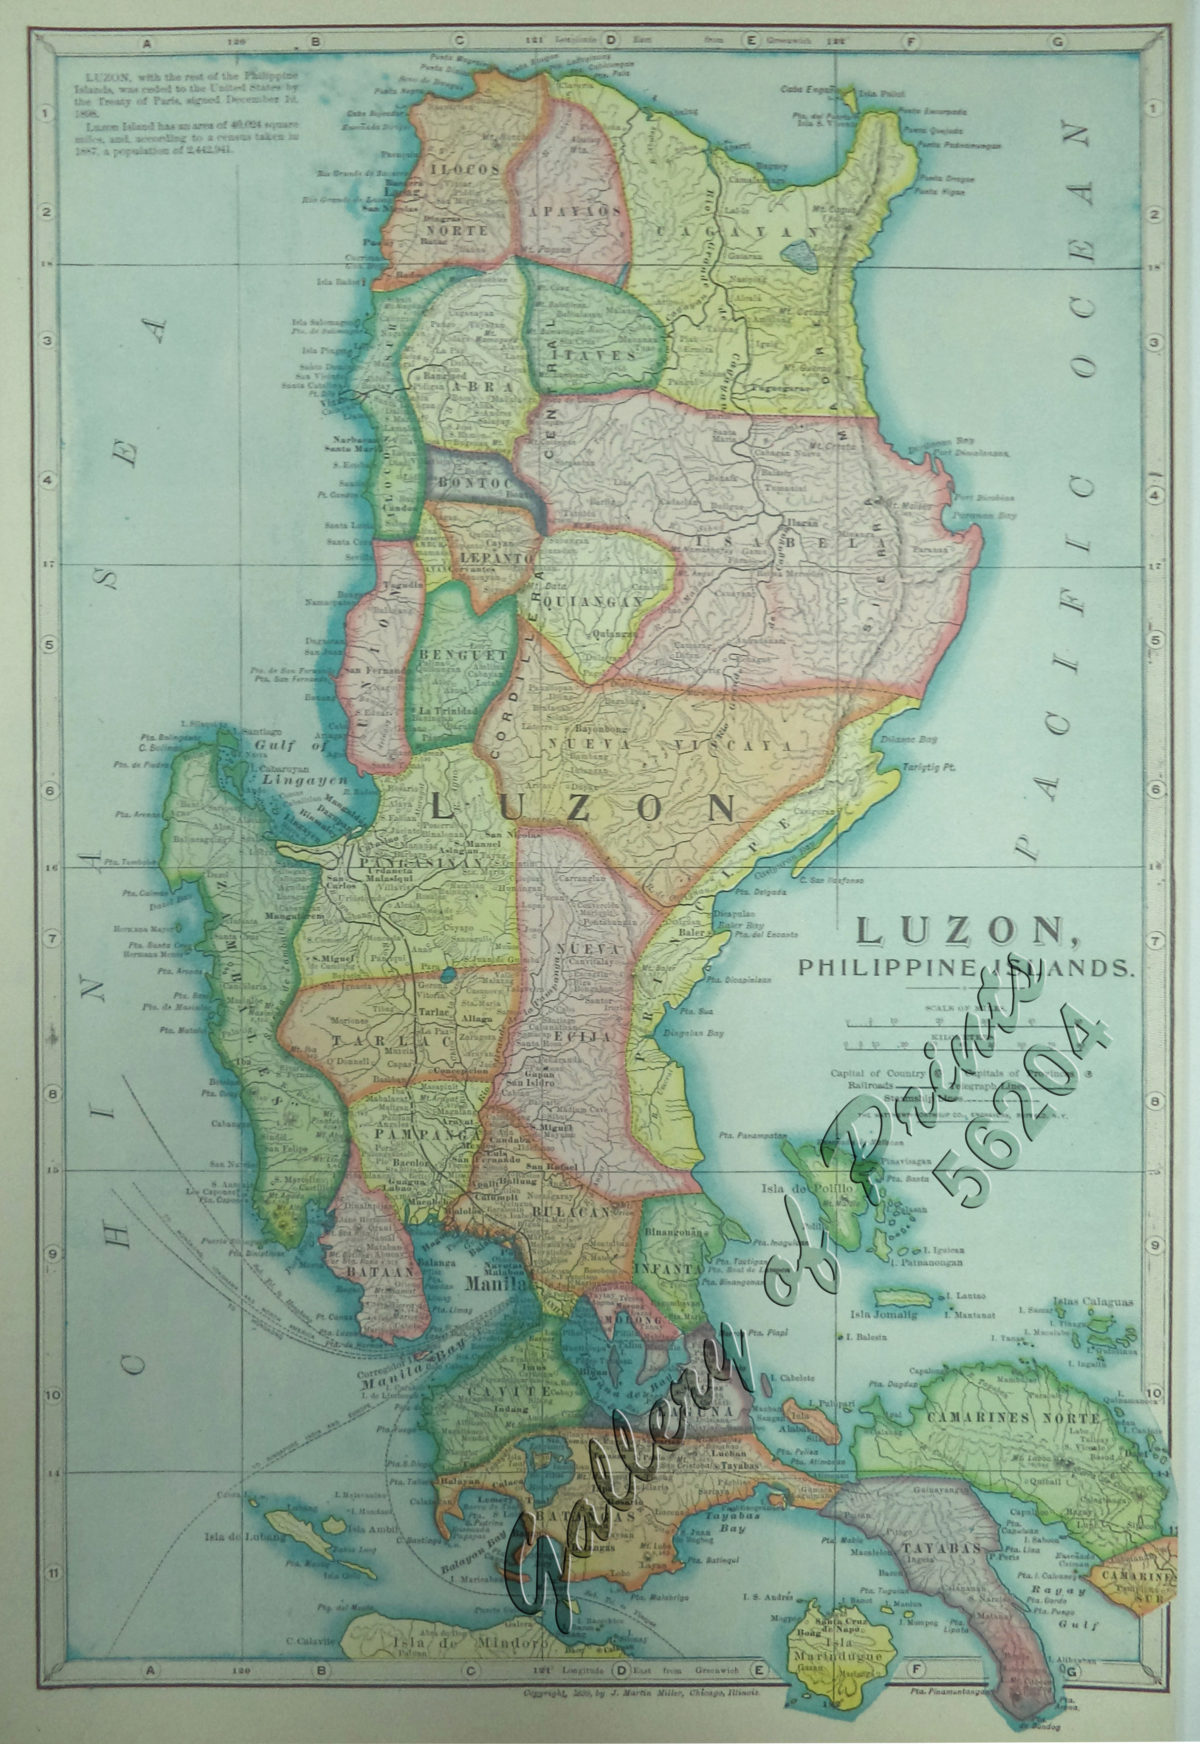 Luzon, Philippine Islands – Gallery of Prints